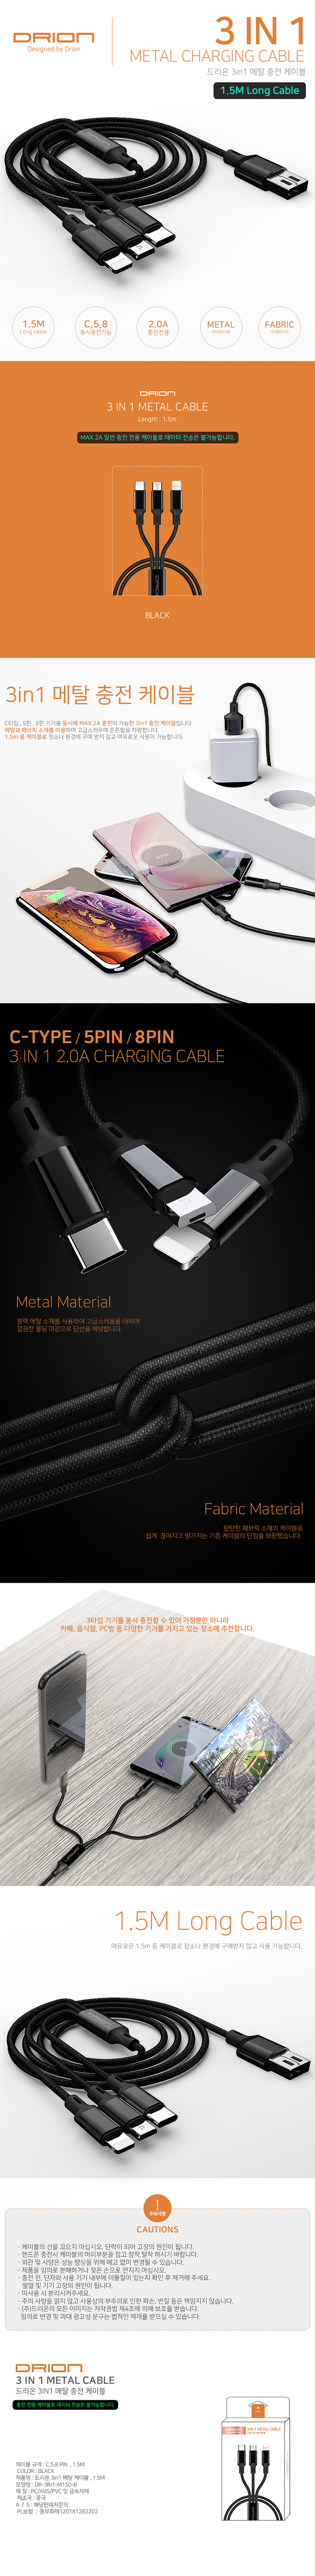 3in1_metal_cable.jpg (800×6534)